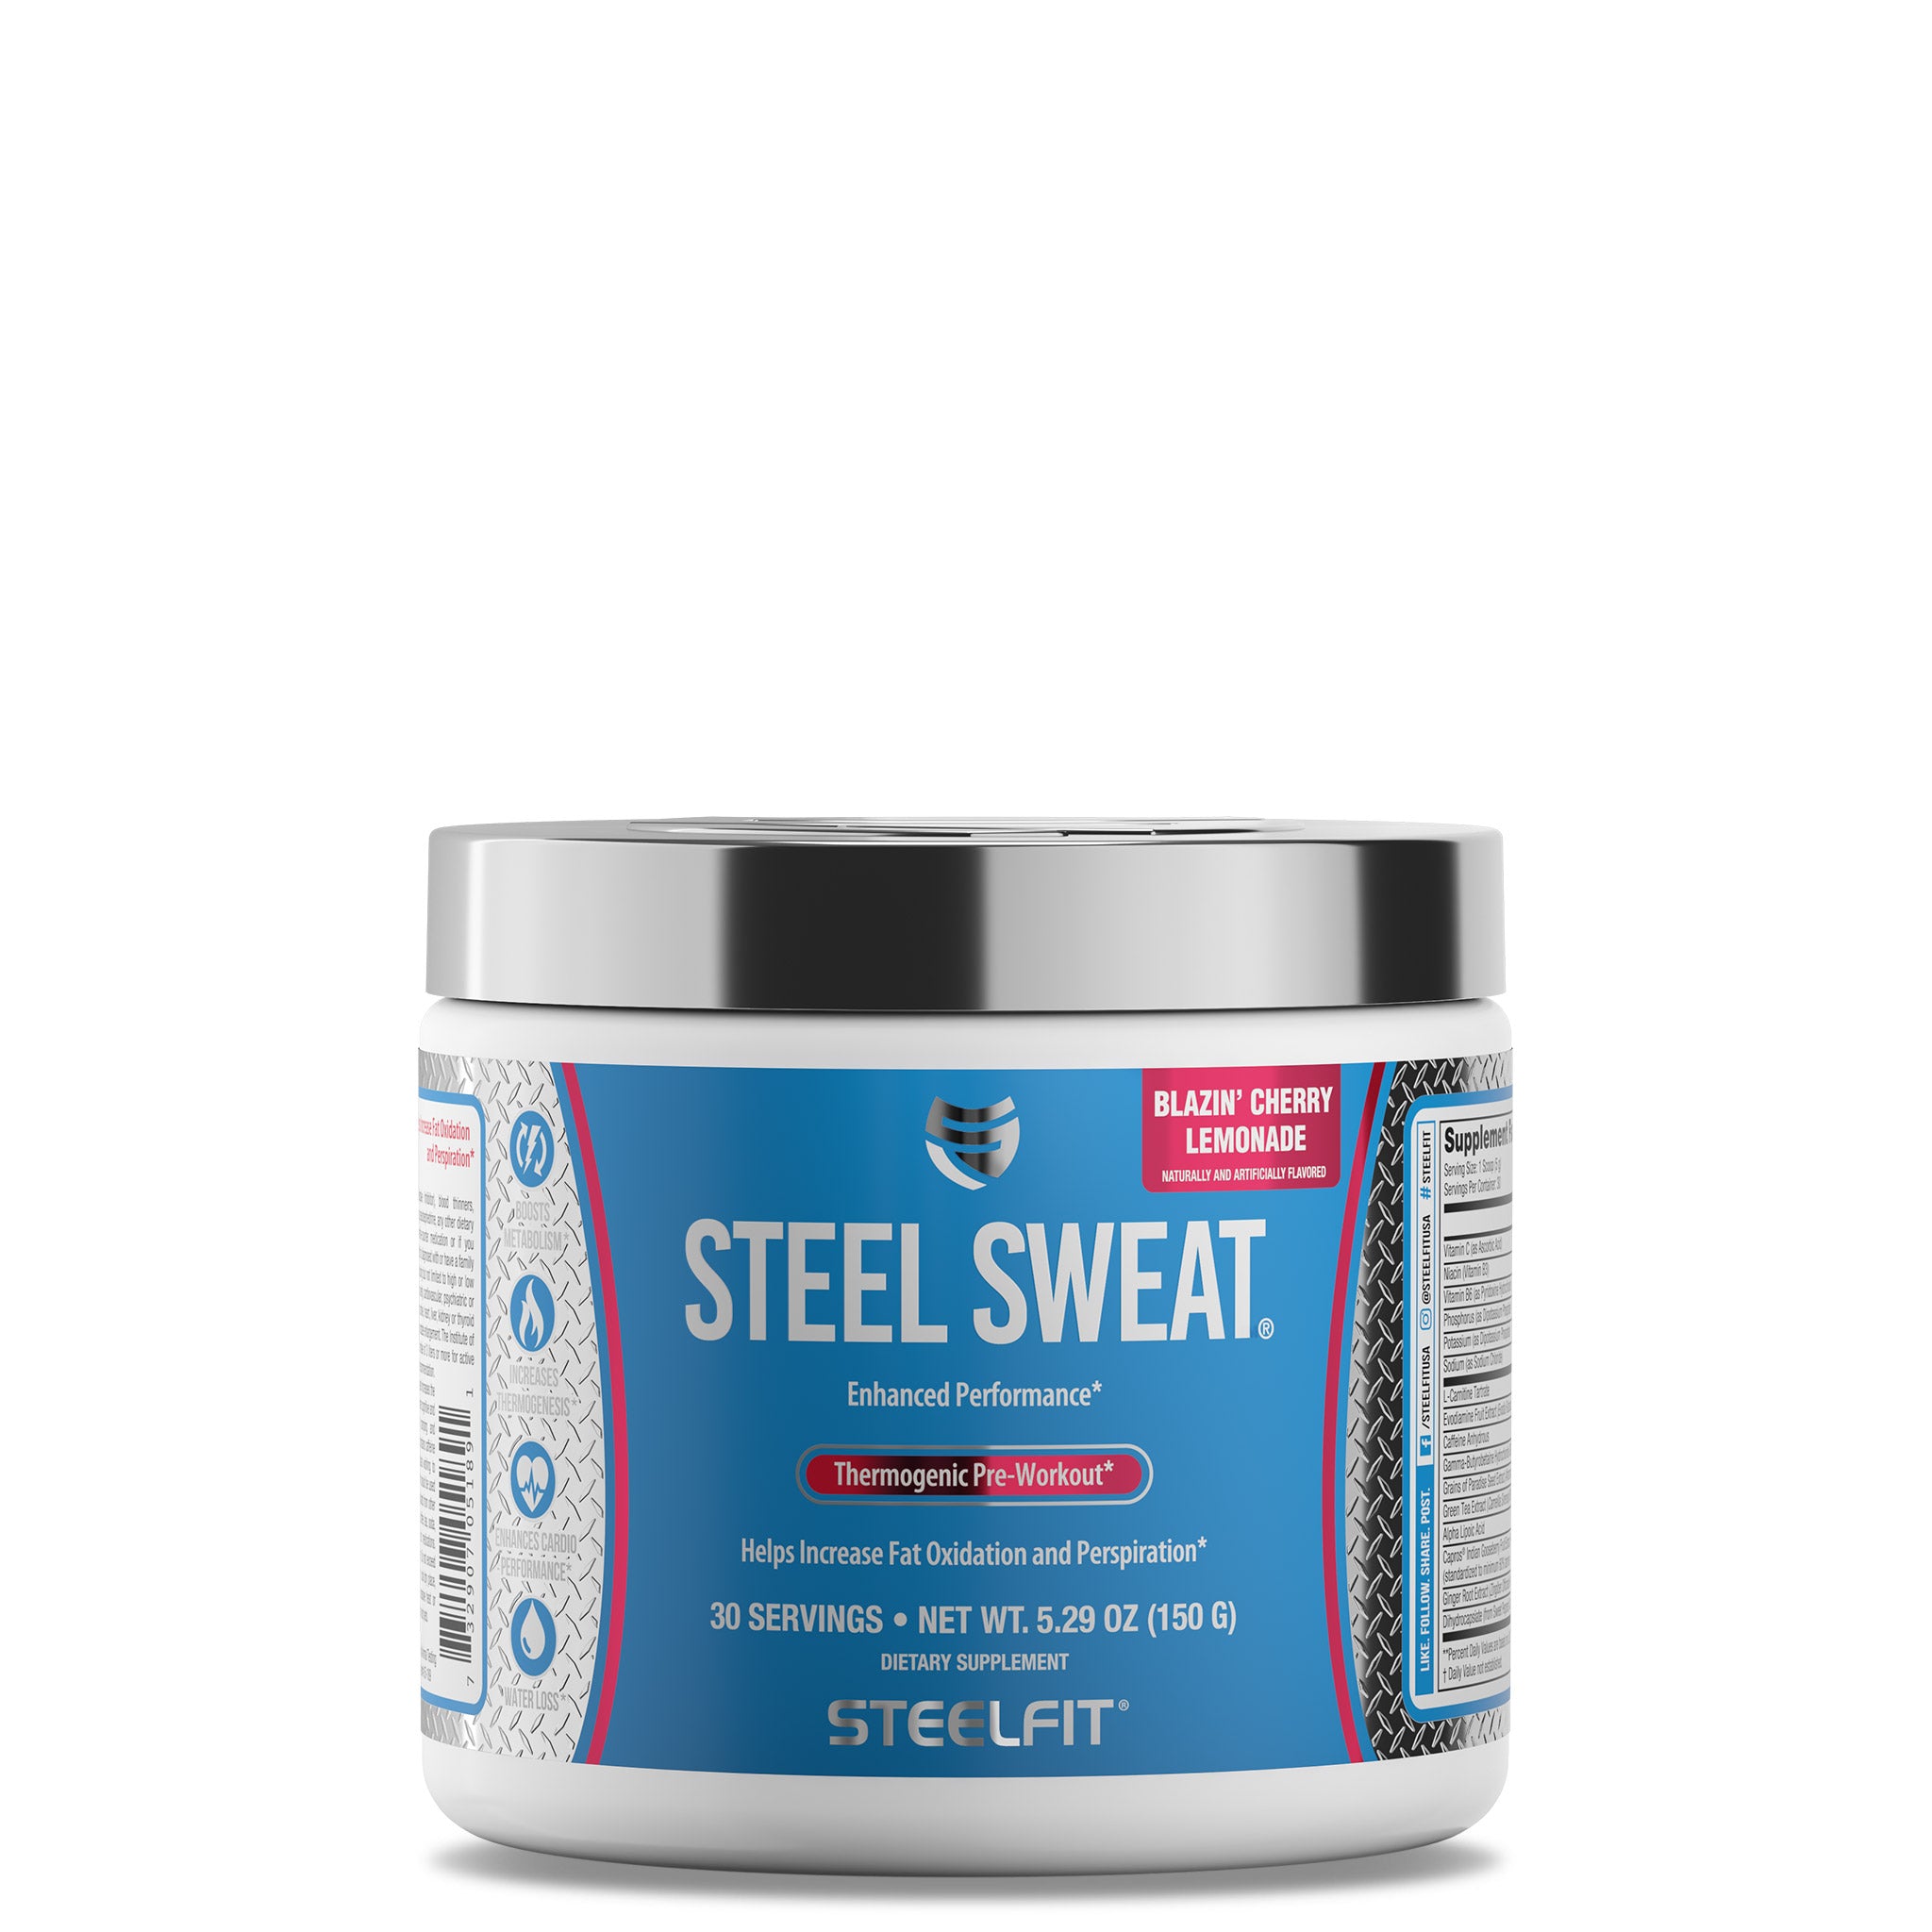 Blazin Cherry lemonade thermogenic pre workout supplement by SteelFit